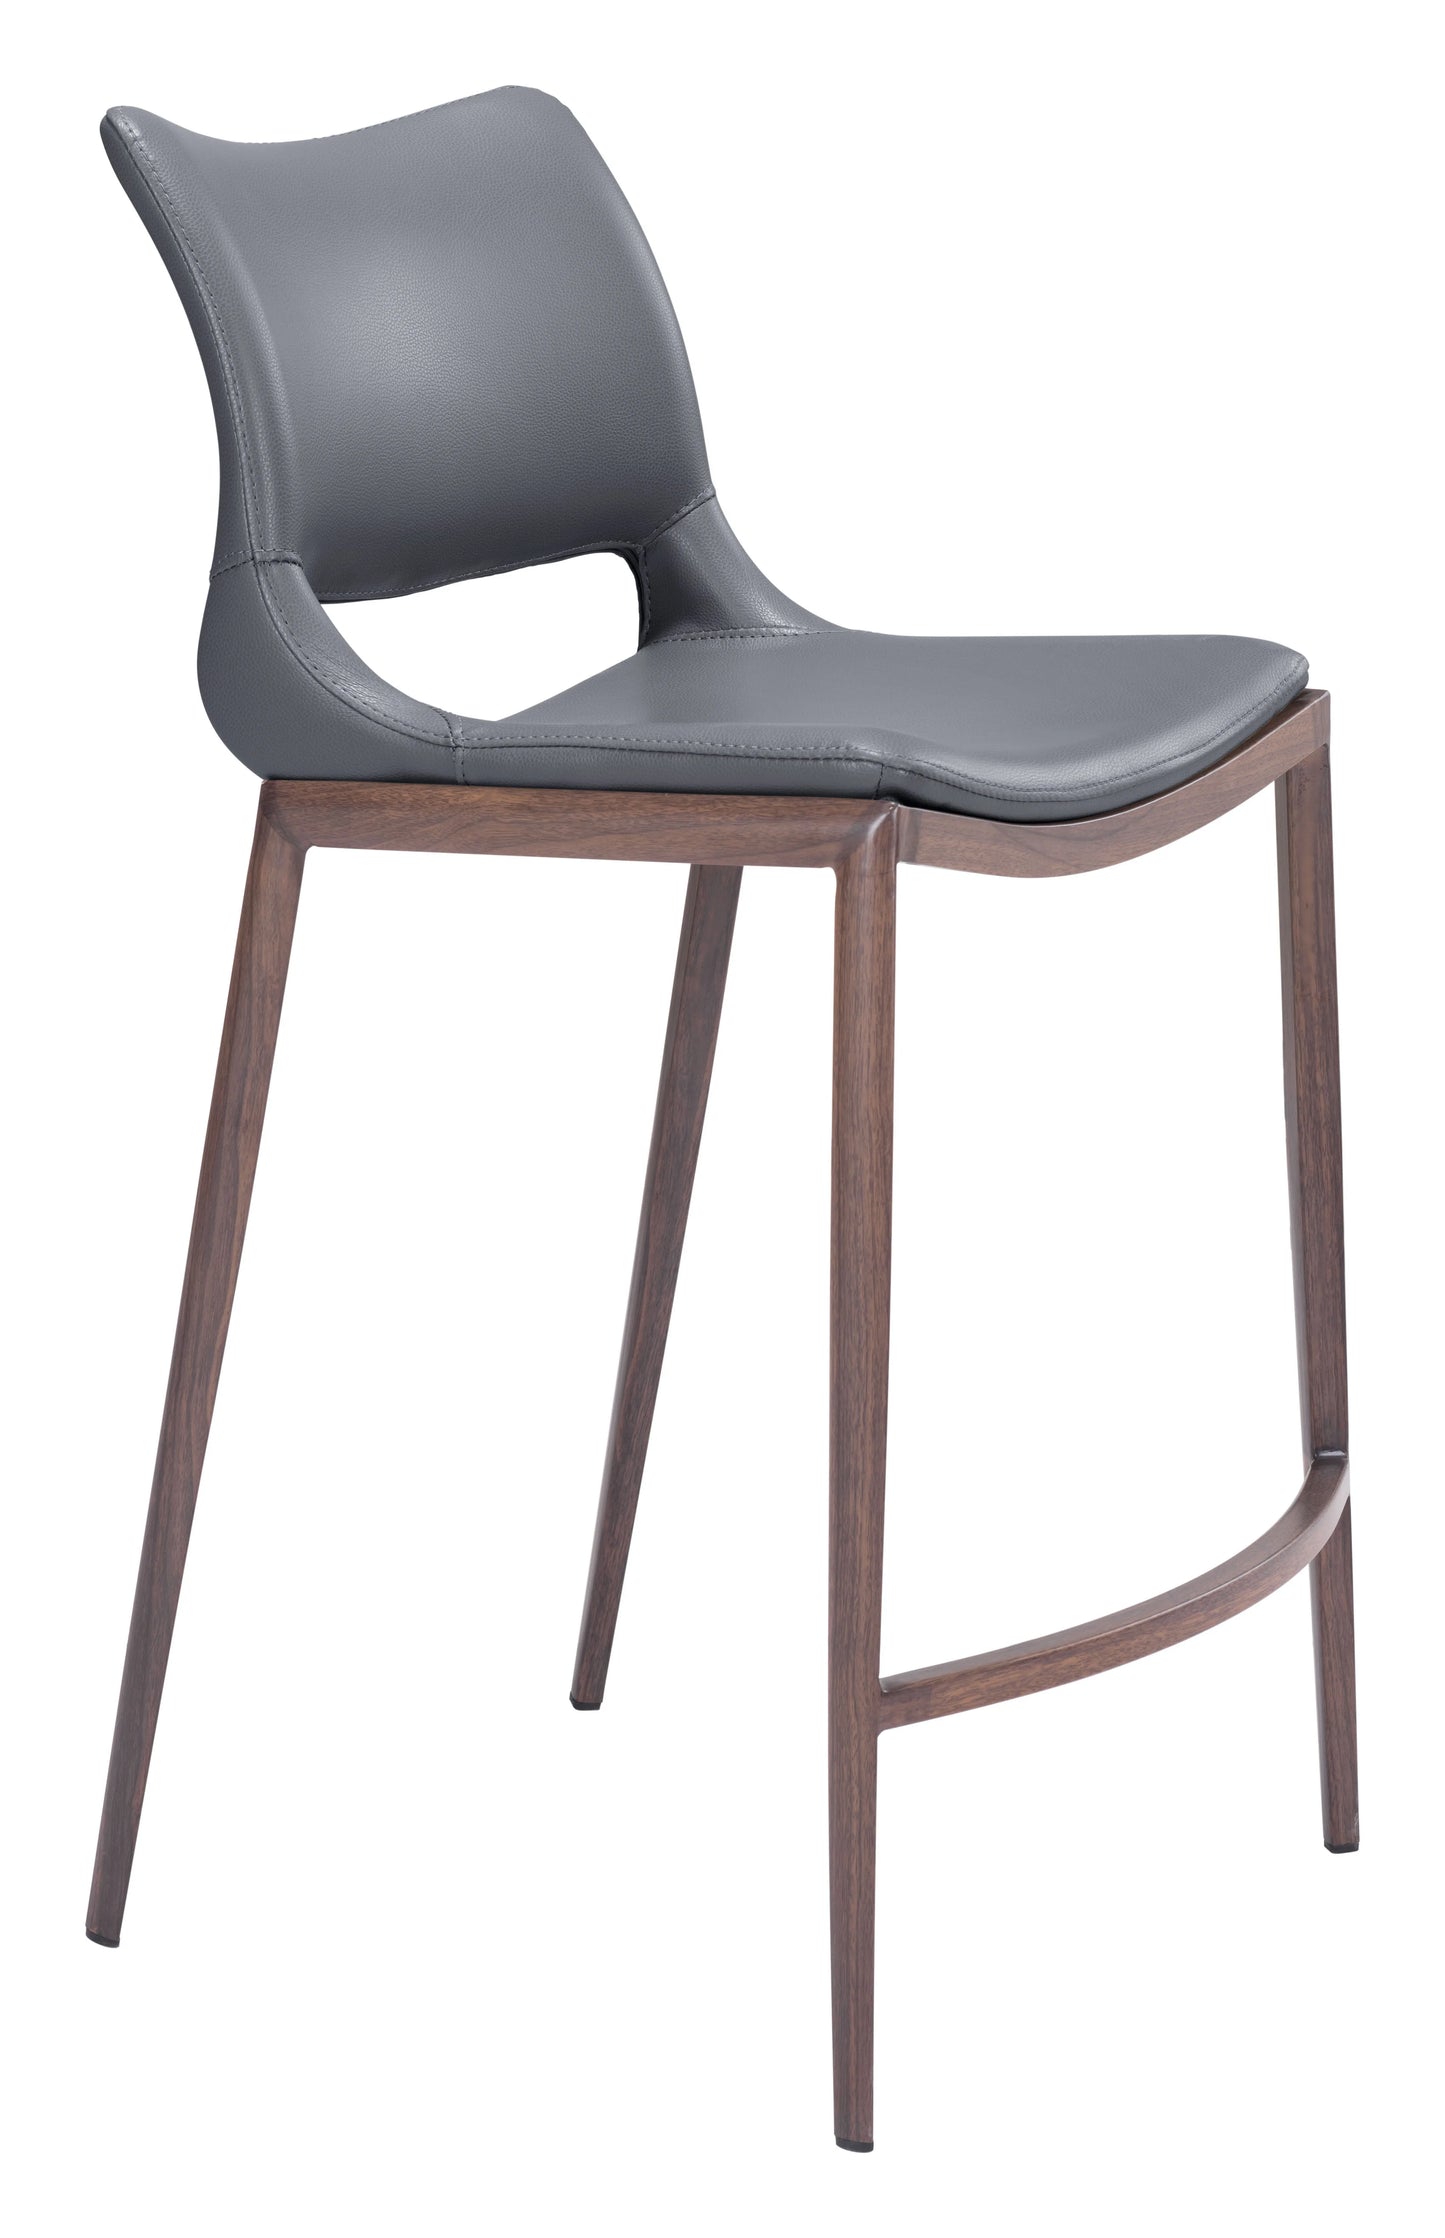 Modern ergonomic counter stool